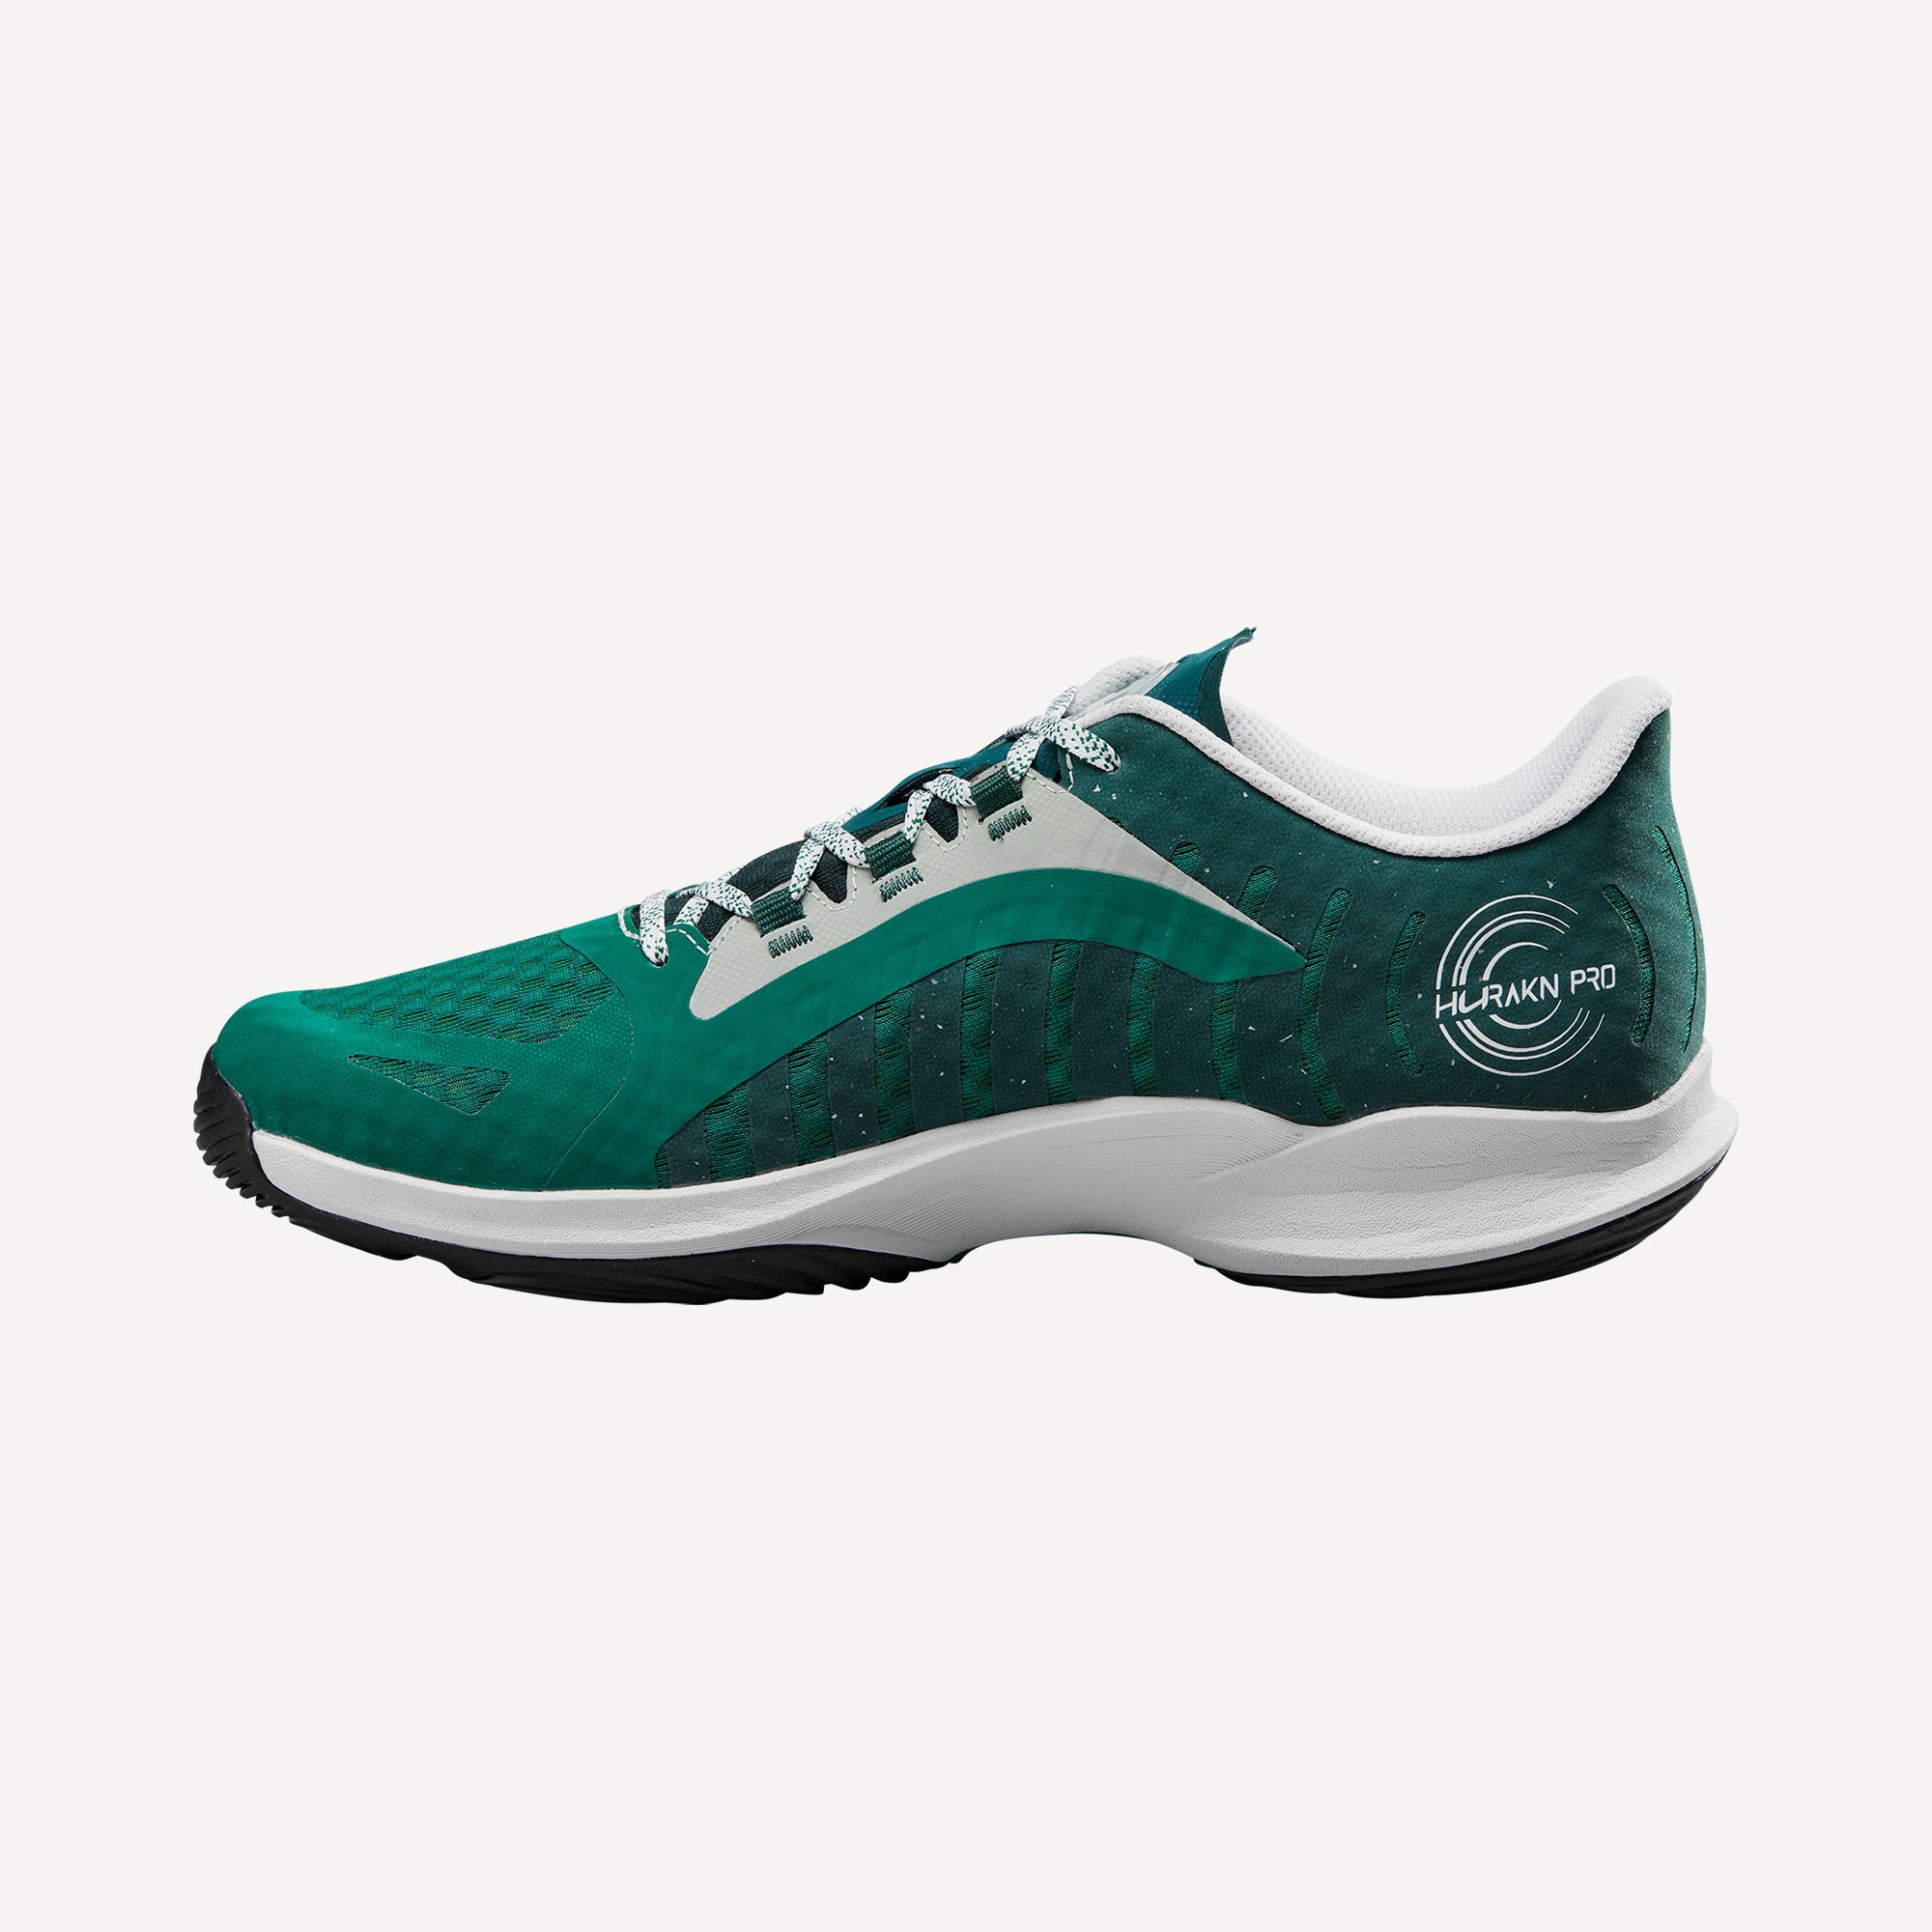 Wilson Hurakn Pro Men's Padel Shoes - Green (3)